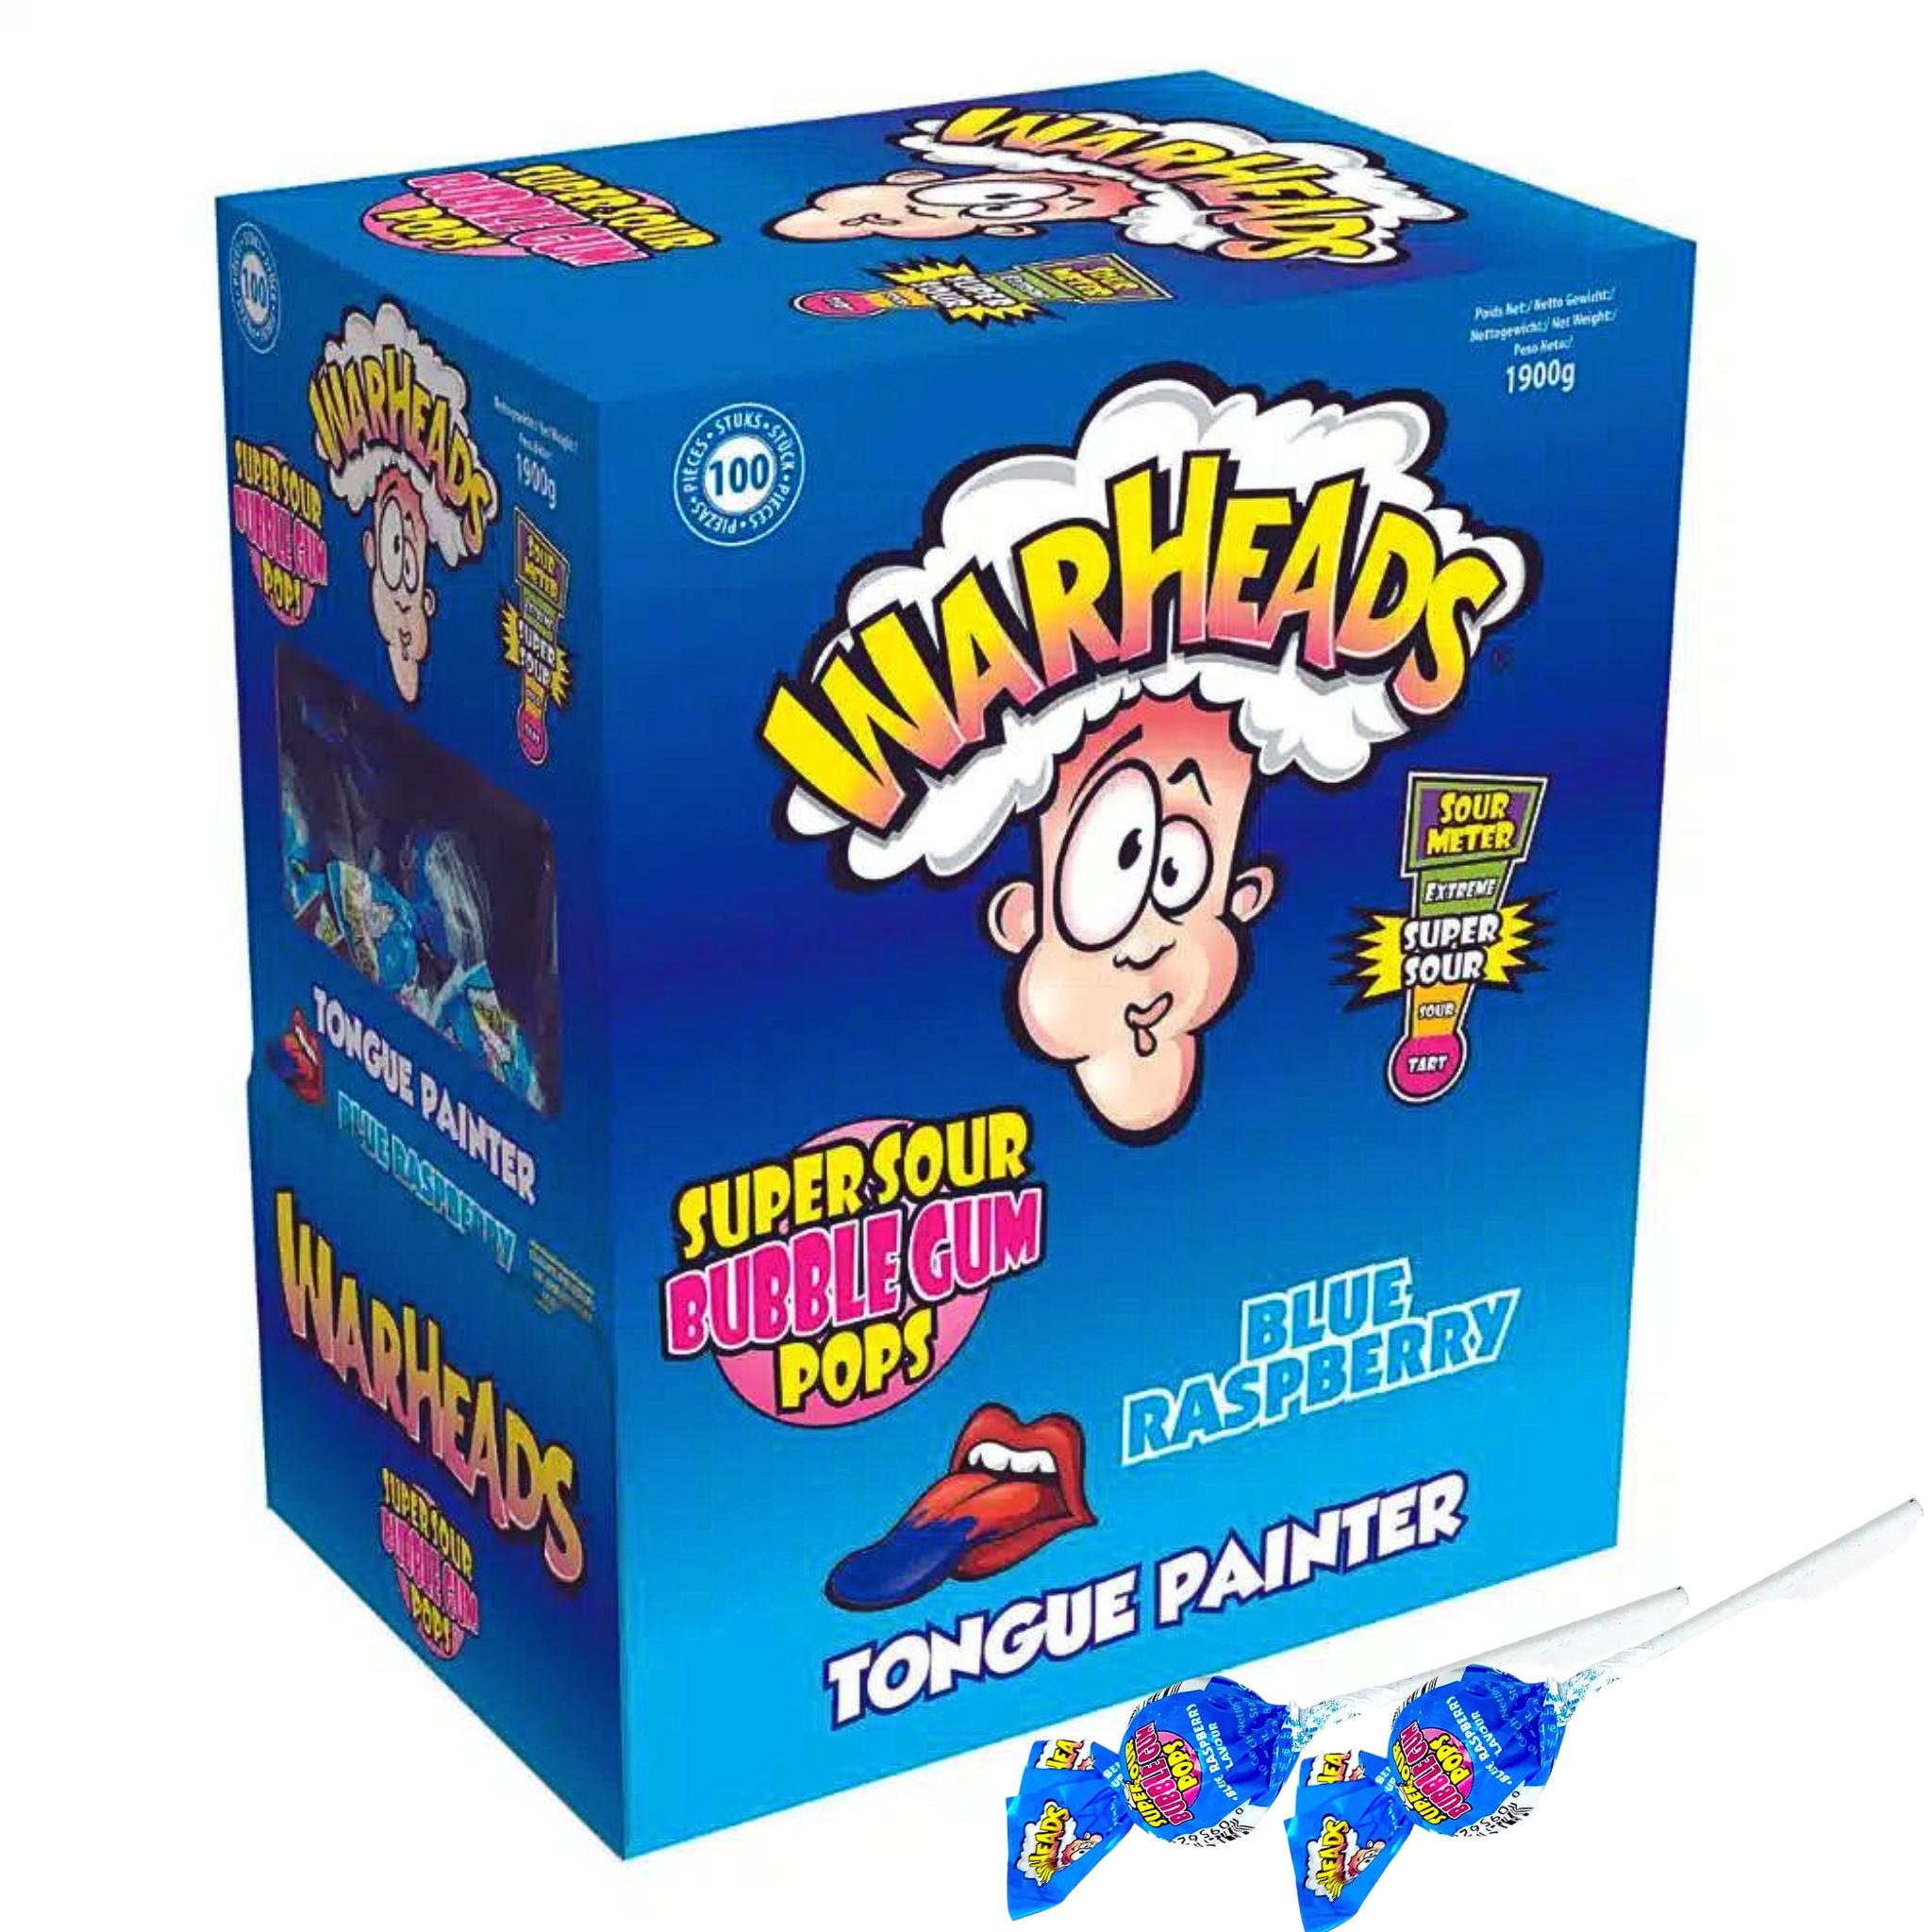 Warheads Super Sour Bubblegum Pops Blue Raspberry - 21g